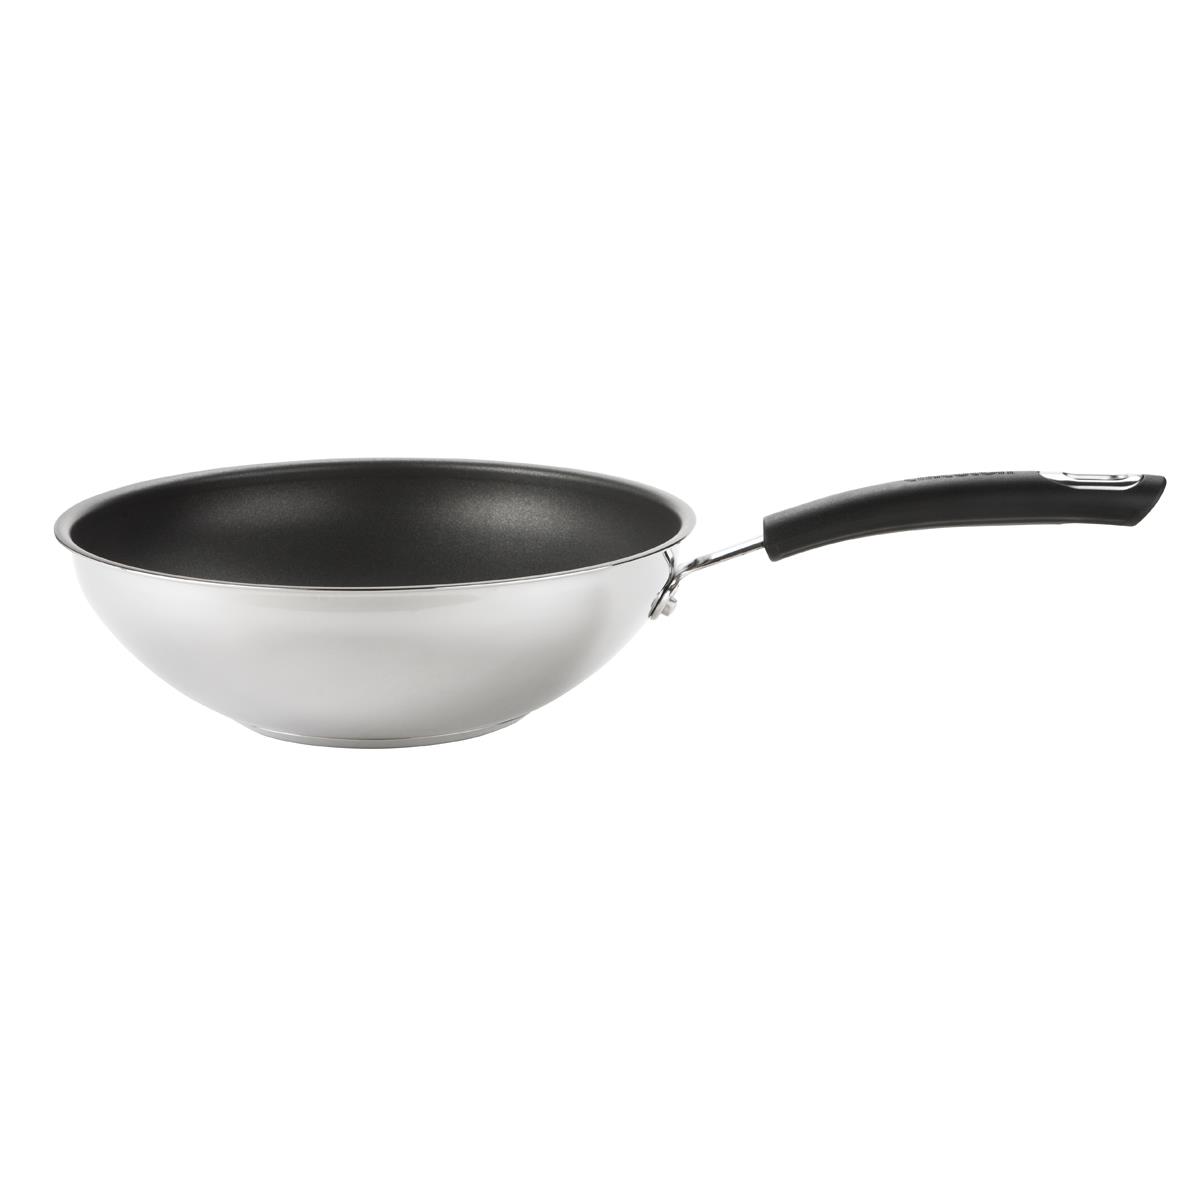 Is the coating on the Circulon wok a type of Teflon derivative like PFOA or PFOE?